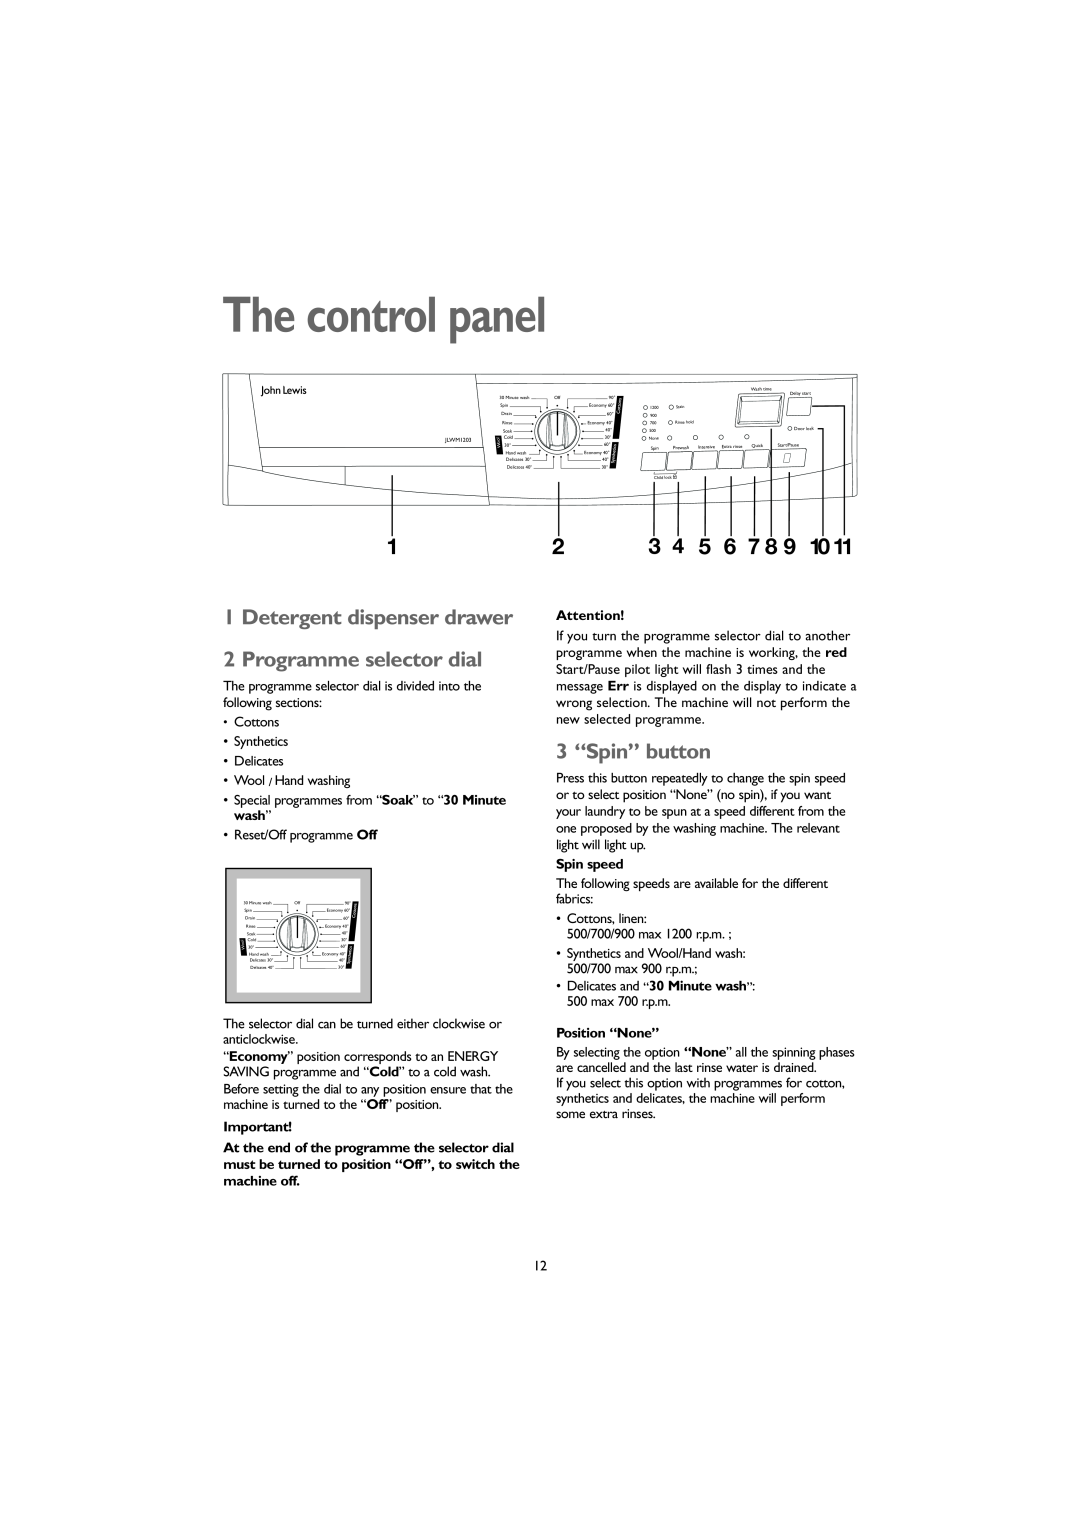 John Lewis JLWM 1203 The control panel, Detergent dispenser drawer 2 Programme selector dial, 3 “Spin” button 